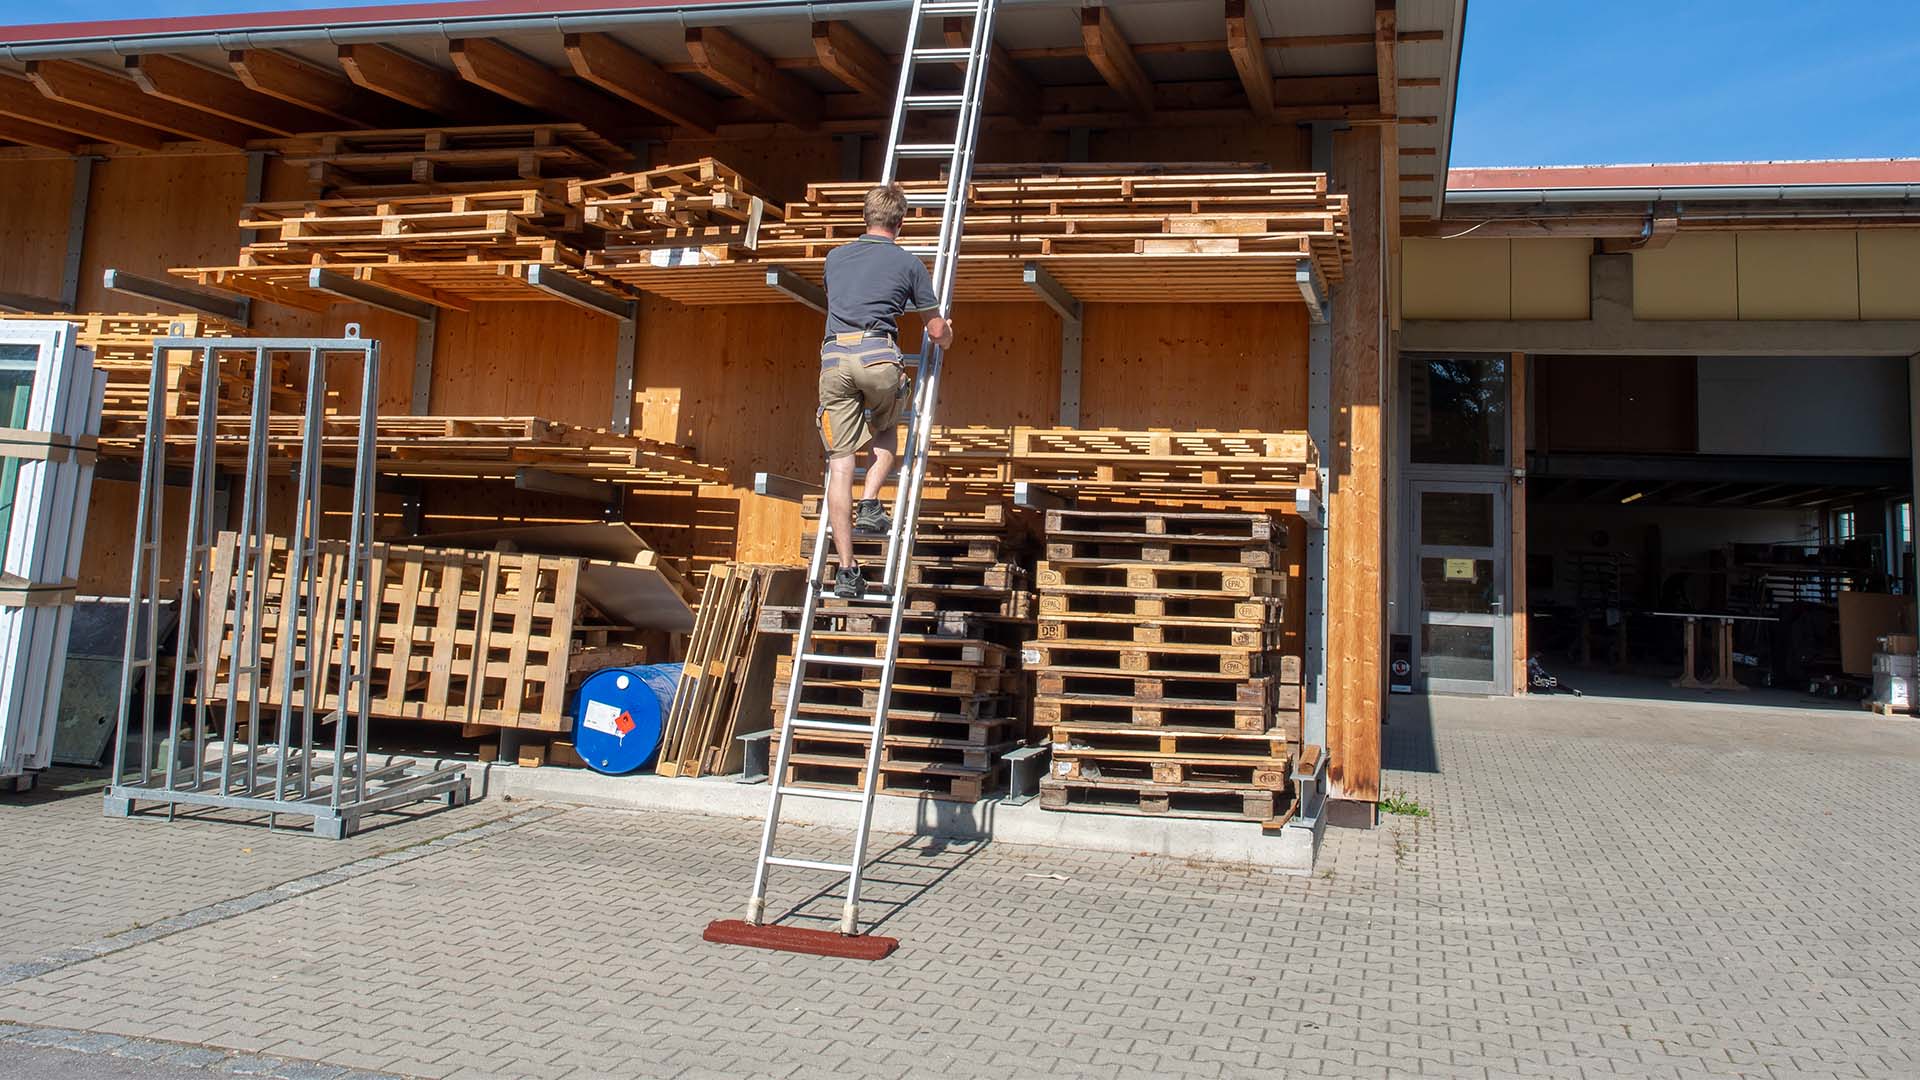 Ladder anti-slip mat for crafts